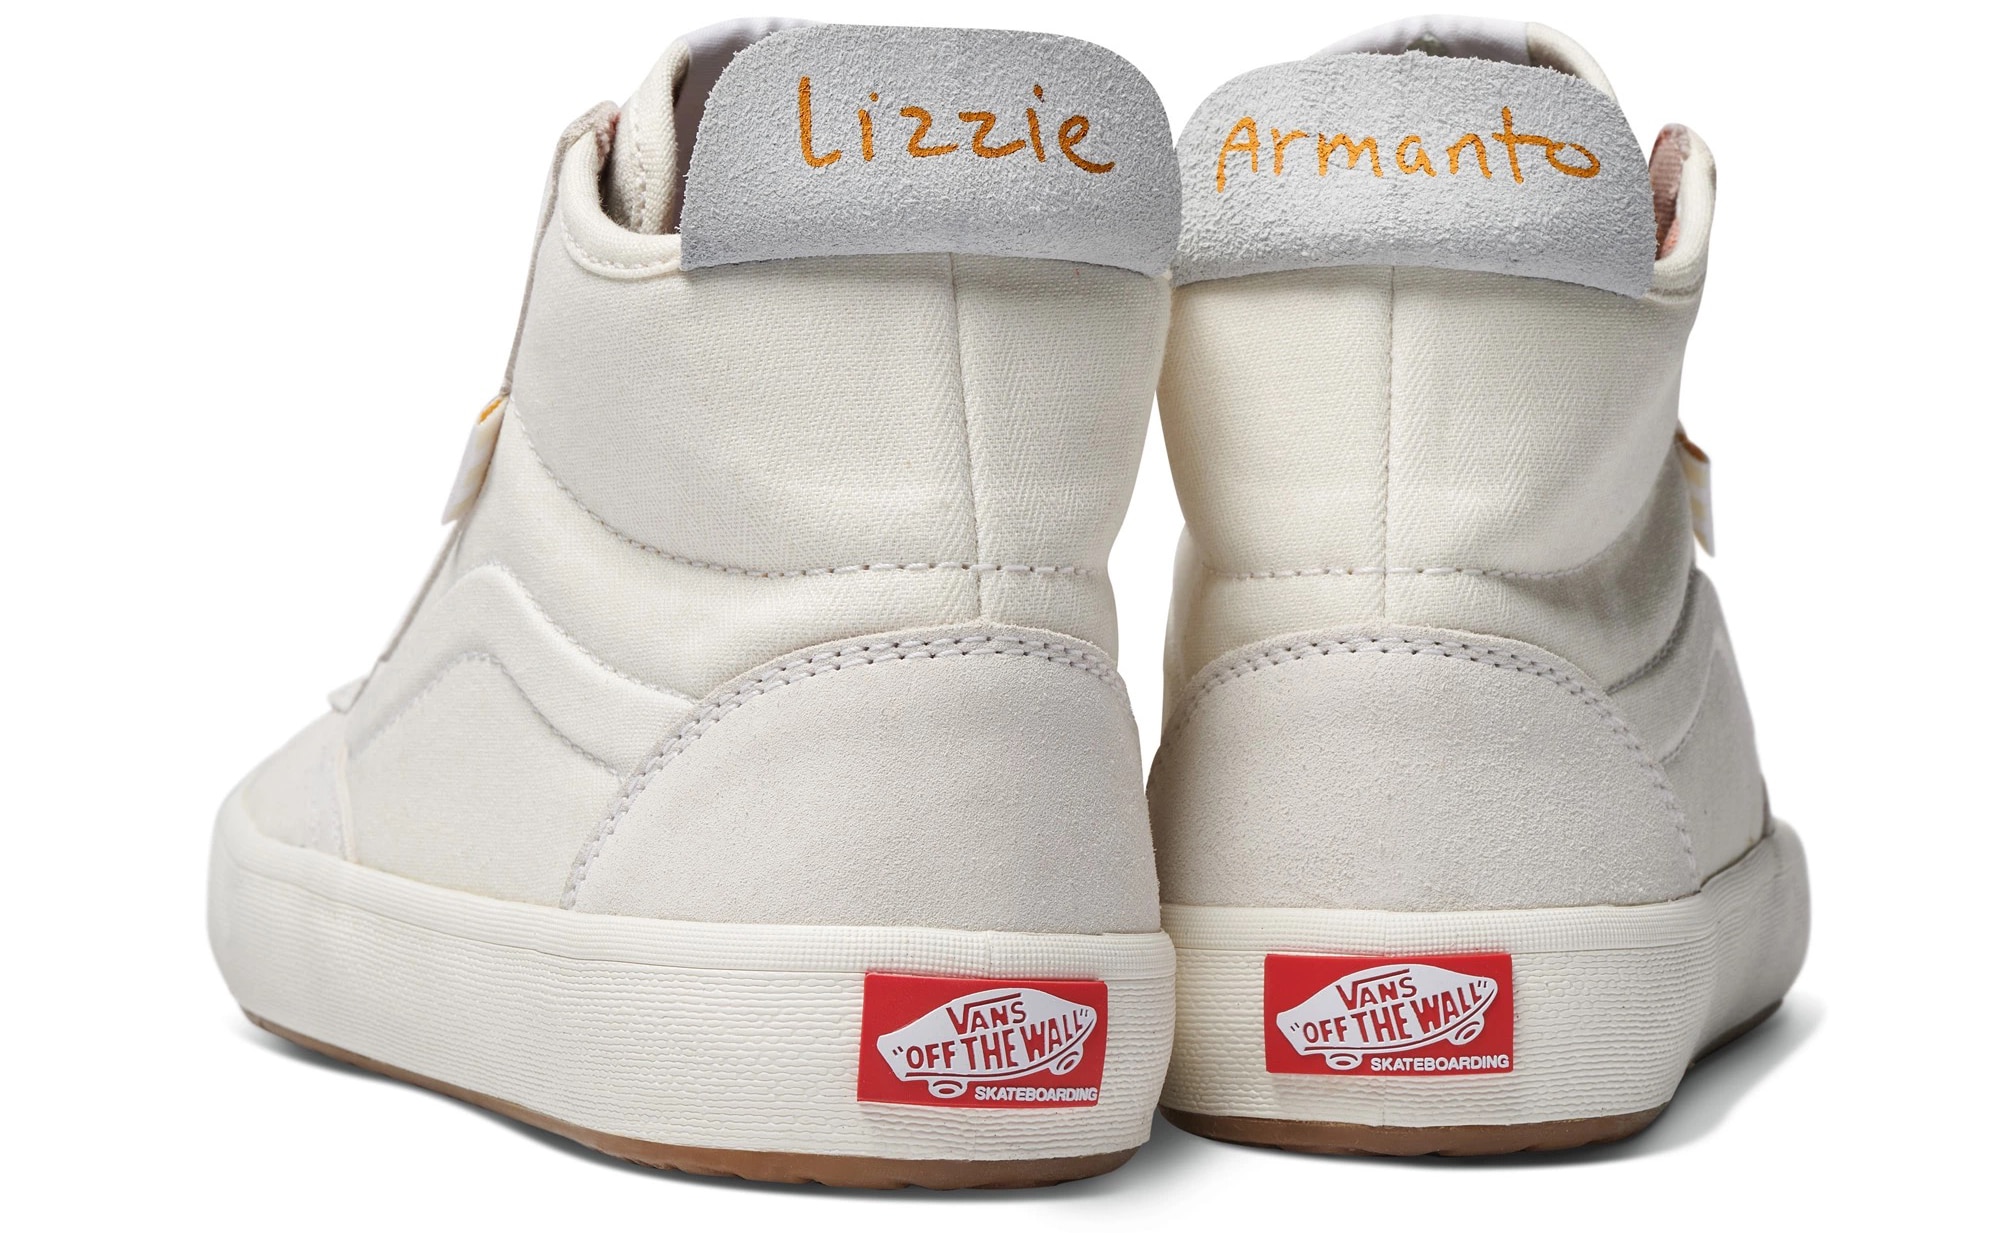 Lizzie Armanto Signature Skate Shoe